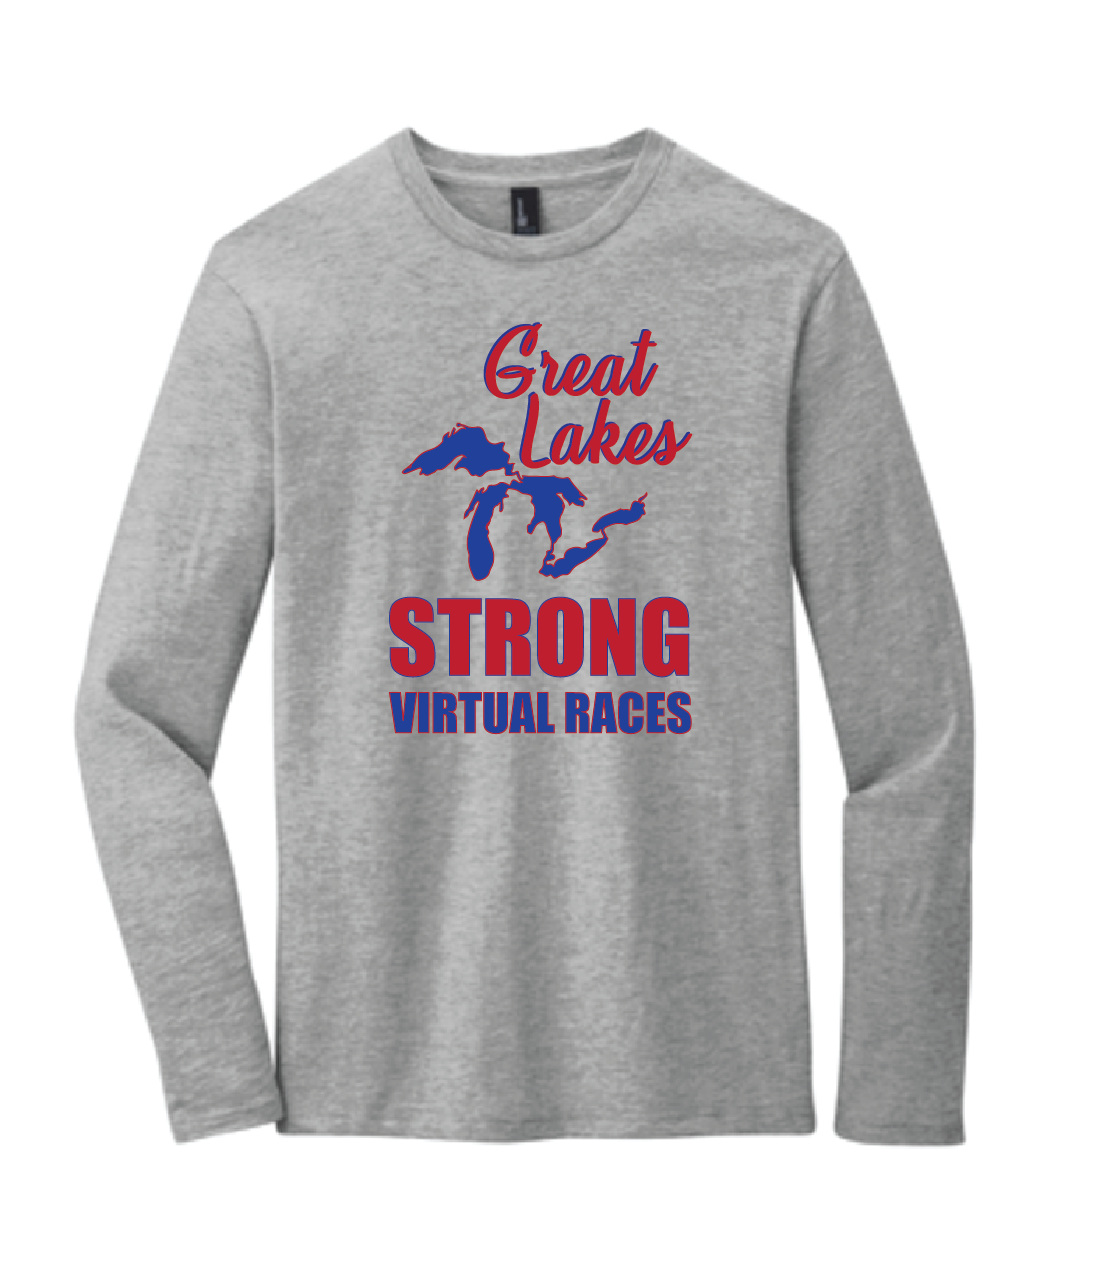 Long Sleeve Shirt Great Lakes Strong Virtual Races